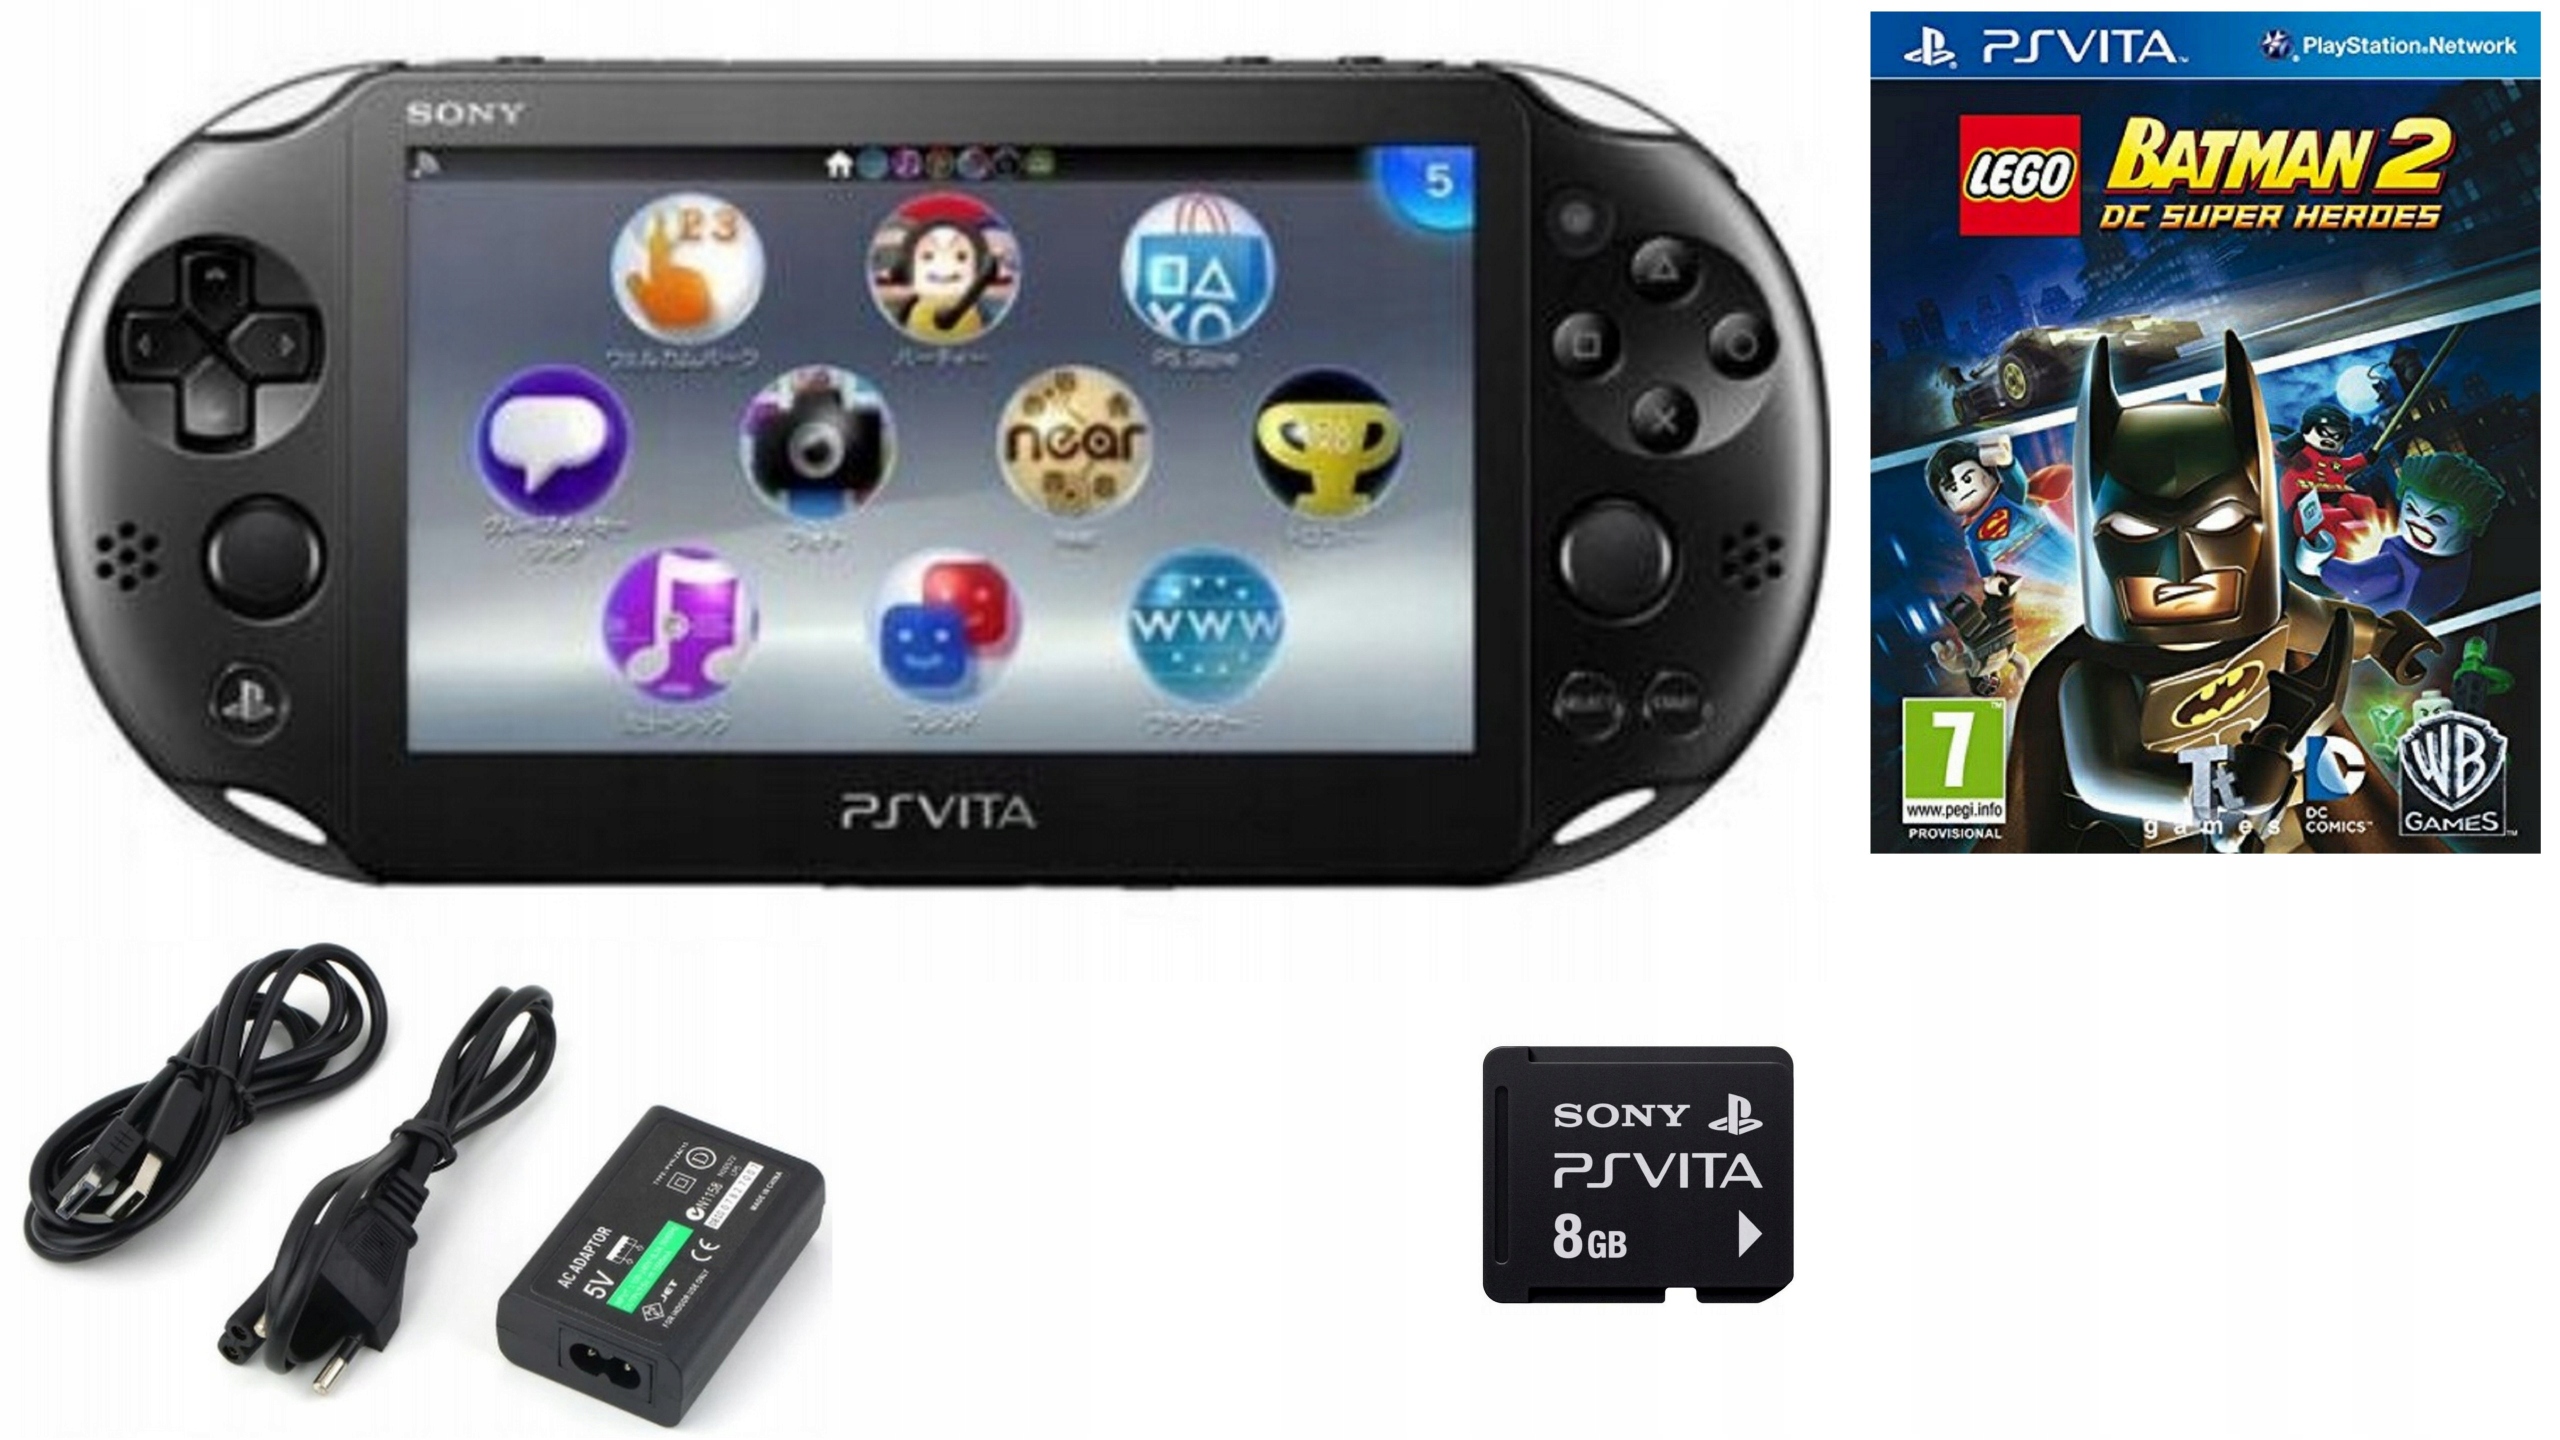 Sony PS Vita WIFI NOVÝ MODEL + 8GB + hra za 4565 Kč od Bydgoszcz - Allegro  - (11121421771)